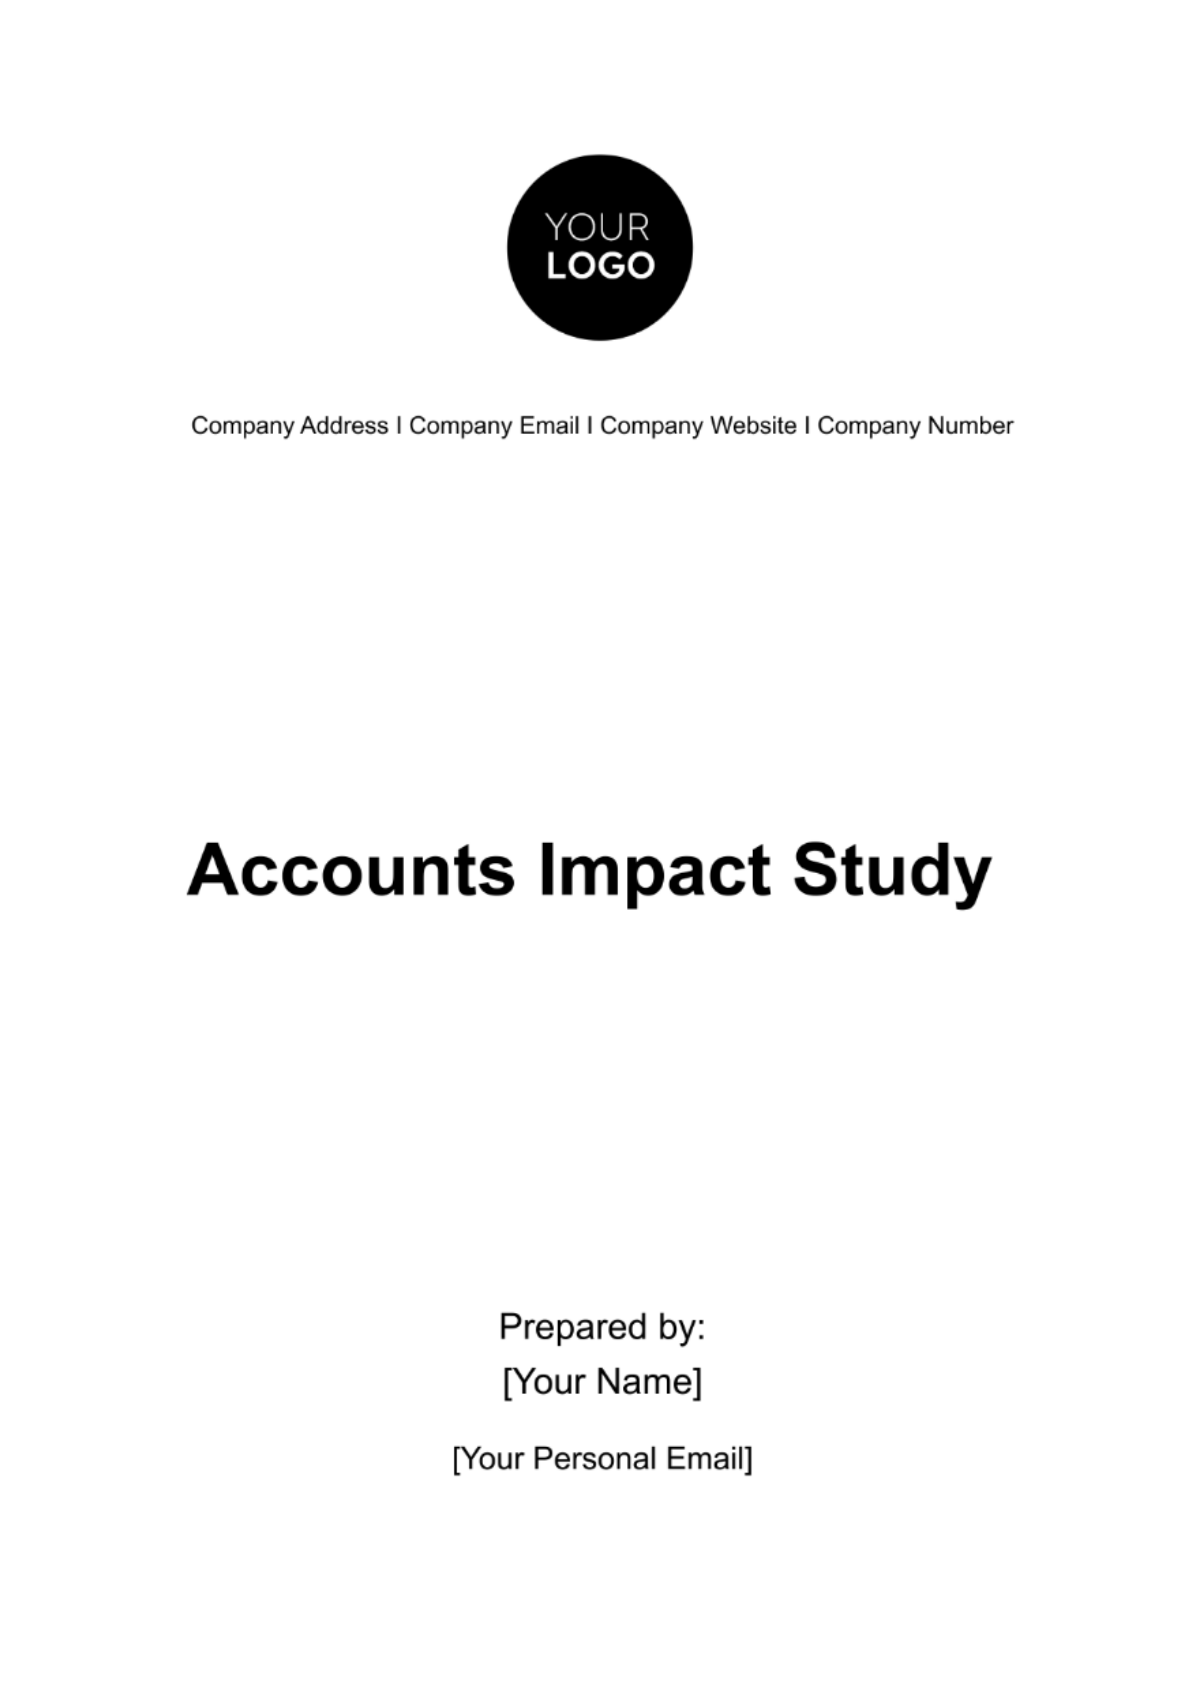 Accounts Impact Study Template